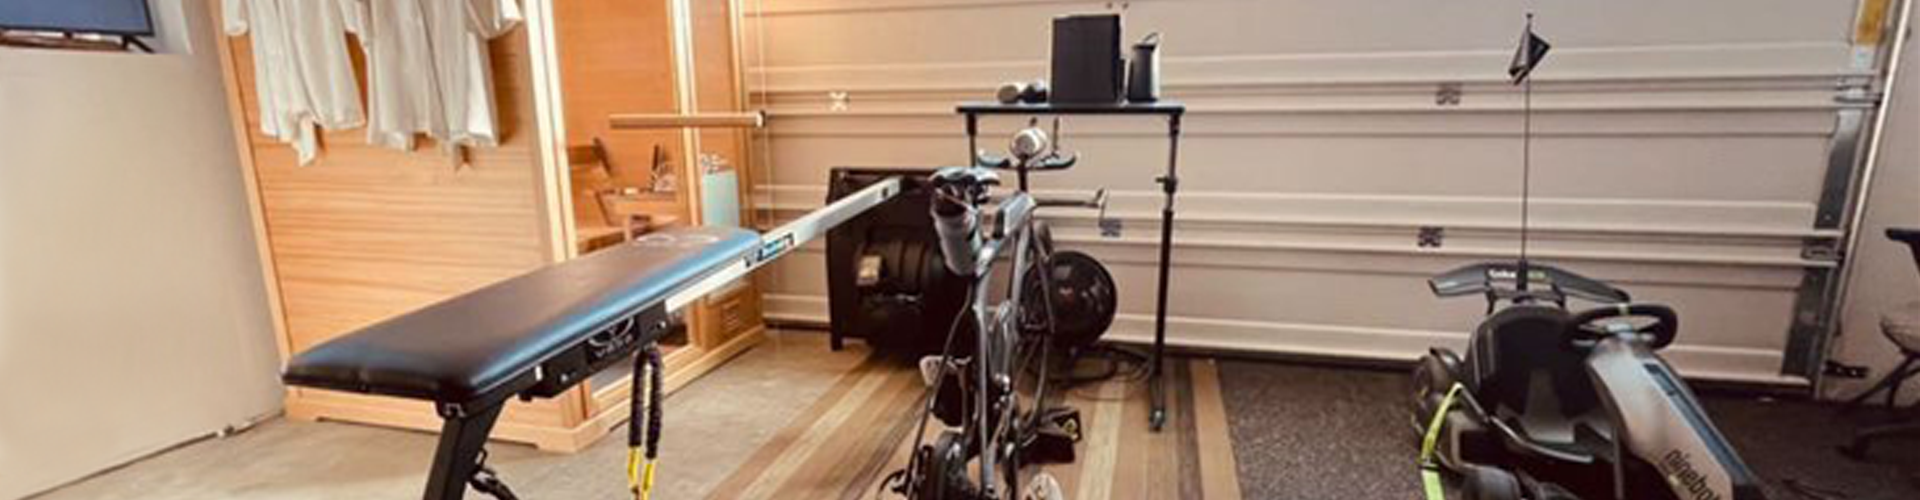 Sauna in Garage Gym is a Key Resource for Triathlete’s Training & Lifestyle